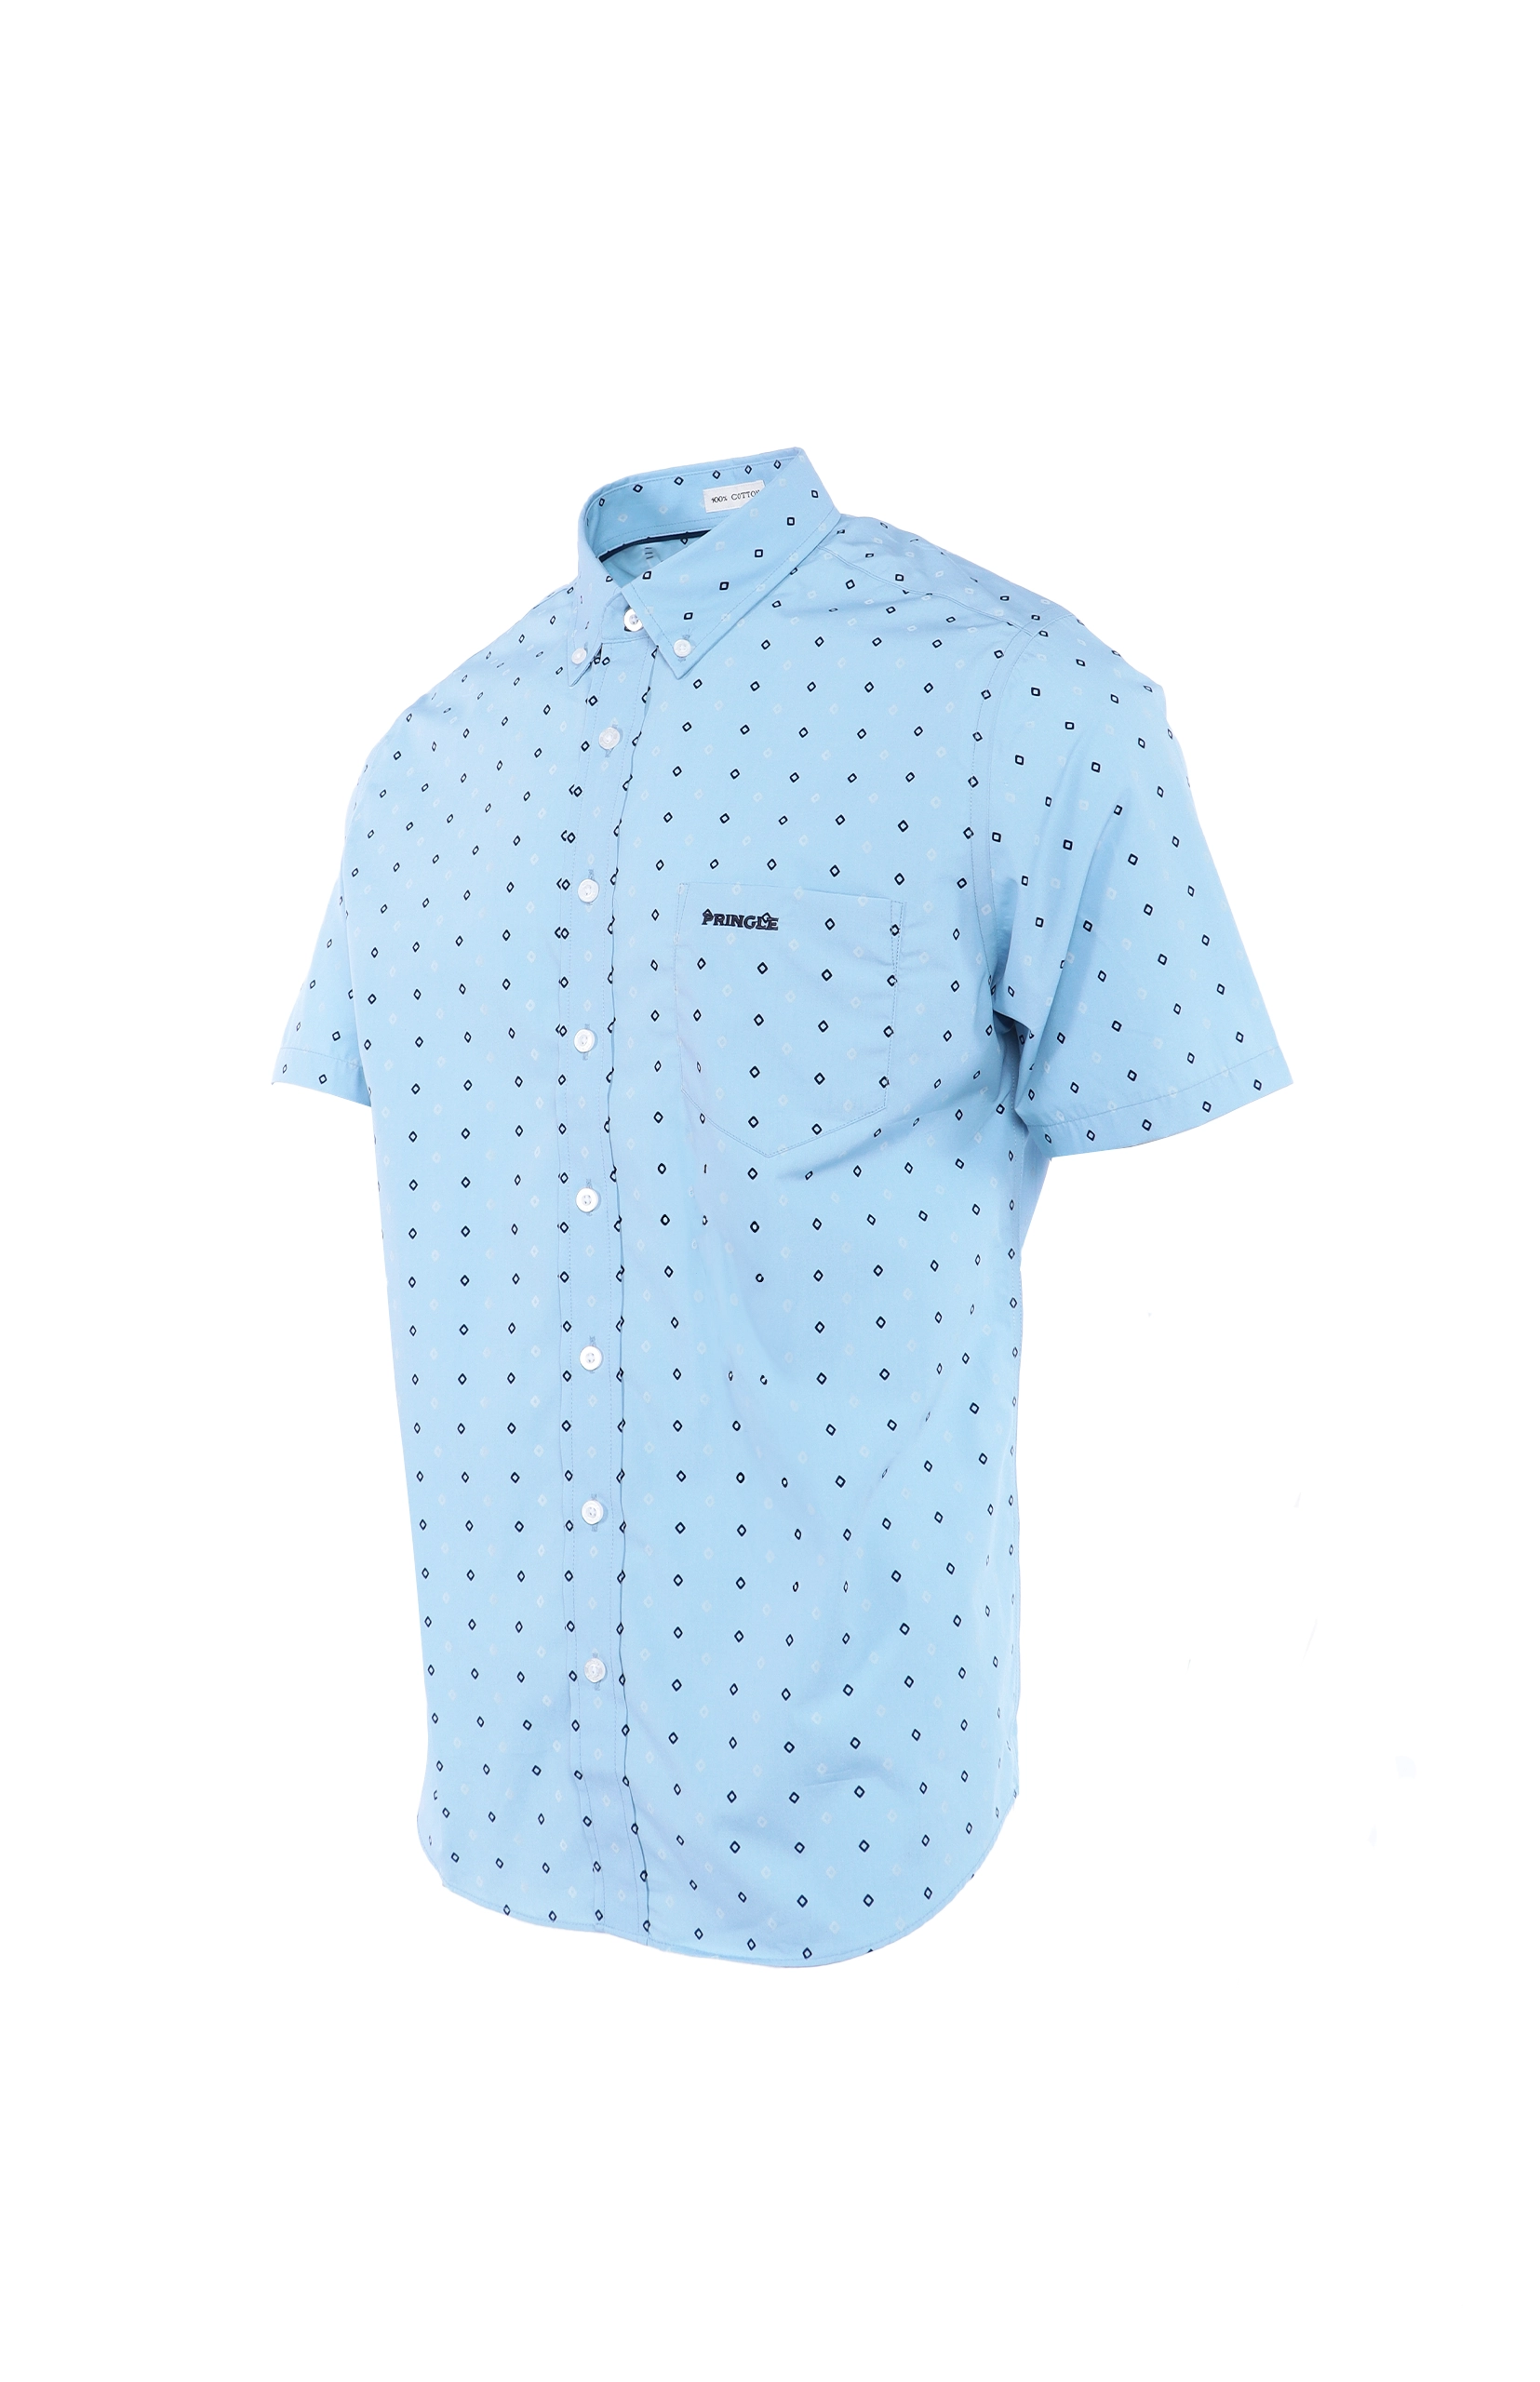 Pringle Phillip S/S classic oxford shirt men's - Frontierco